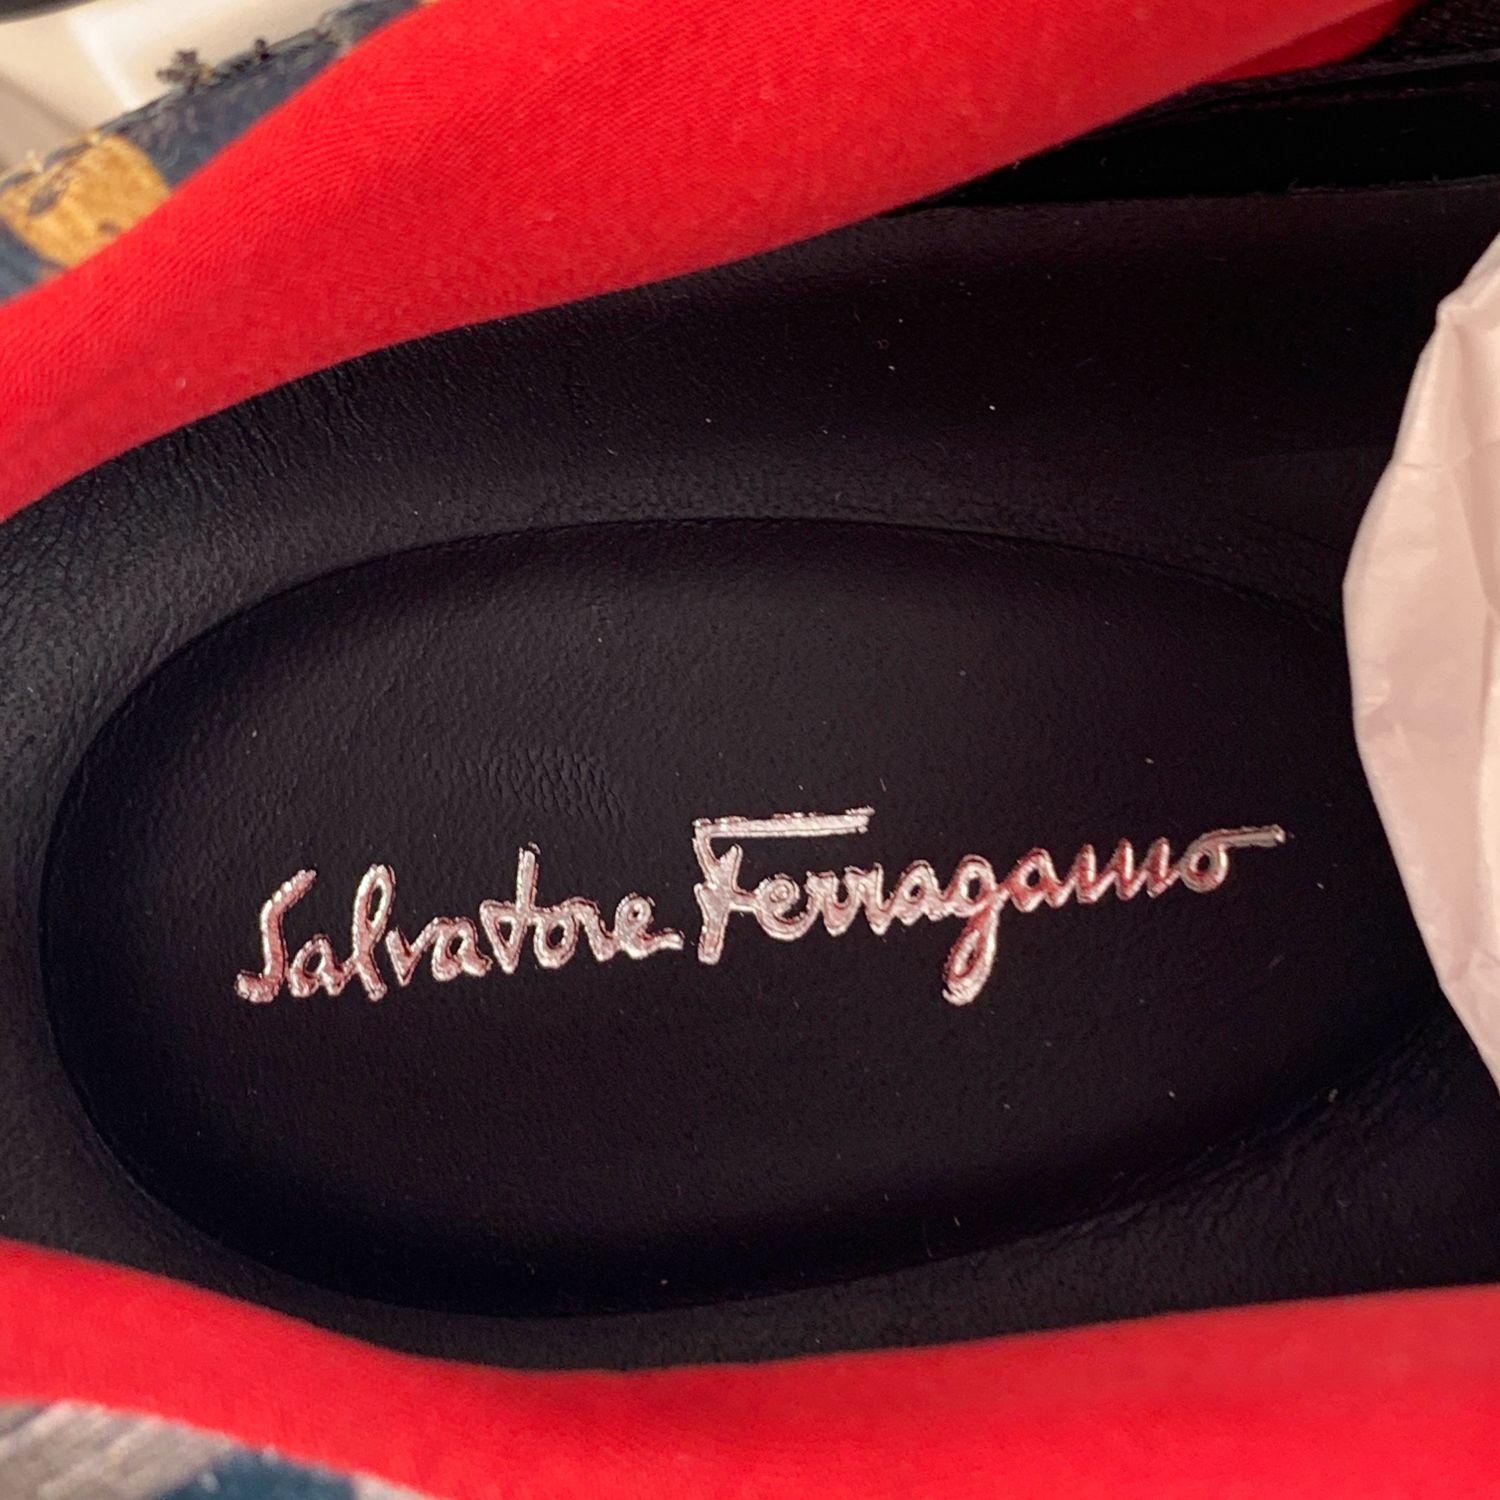 Salvatore Ferragamo Leather Gatteo ST Sneakers Shoes Size 7.5C 38 C 2